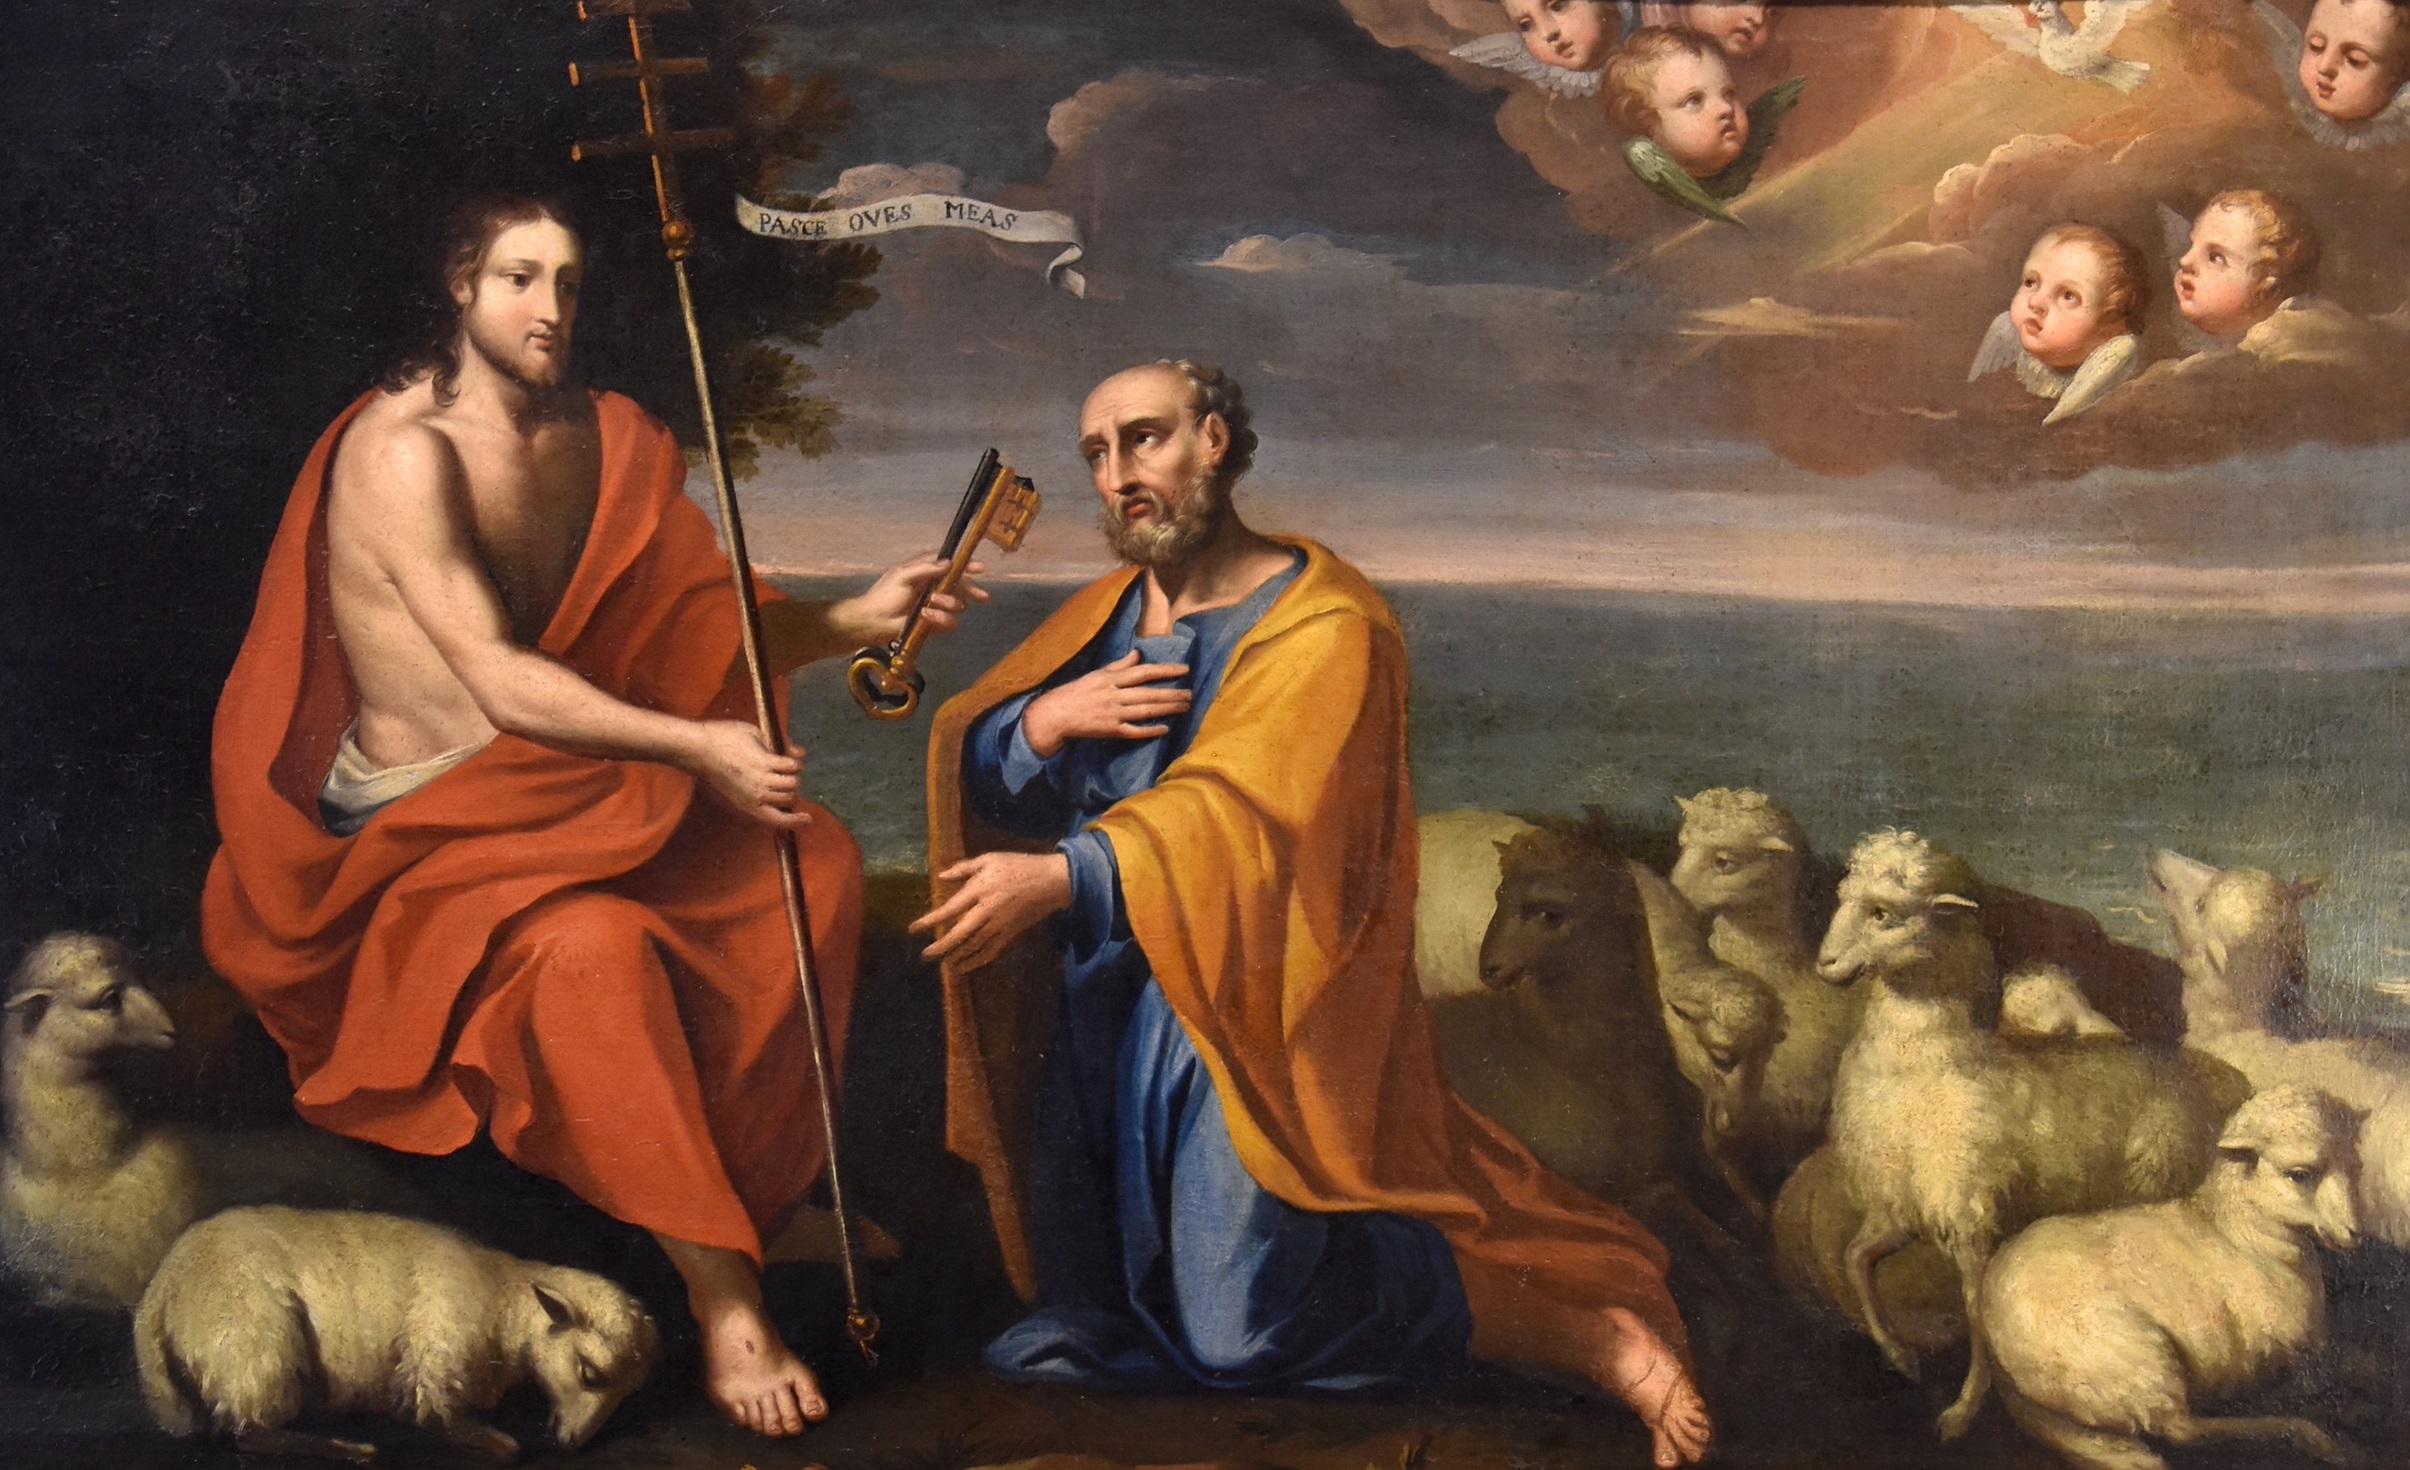 Christ St. Peter De Matteis, Gemälde Öl auf Leinwand 17/18 Jahrhundert, Alter Meister, Italien – Painting von Paolo De Matteis (naples, 1662 - 1728)